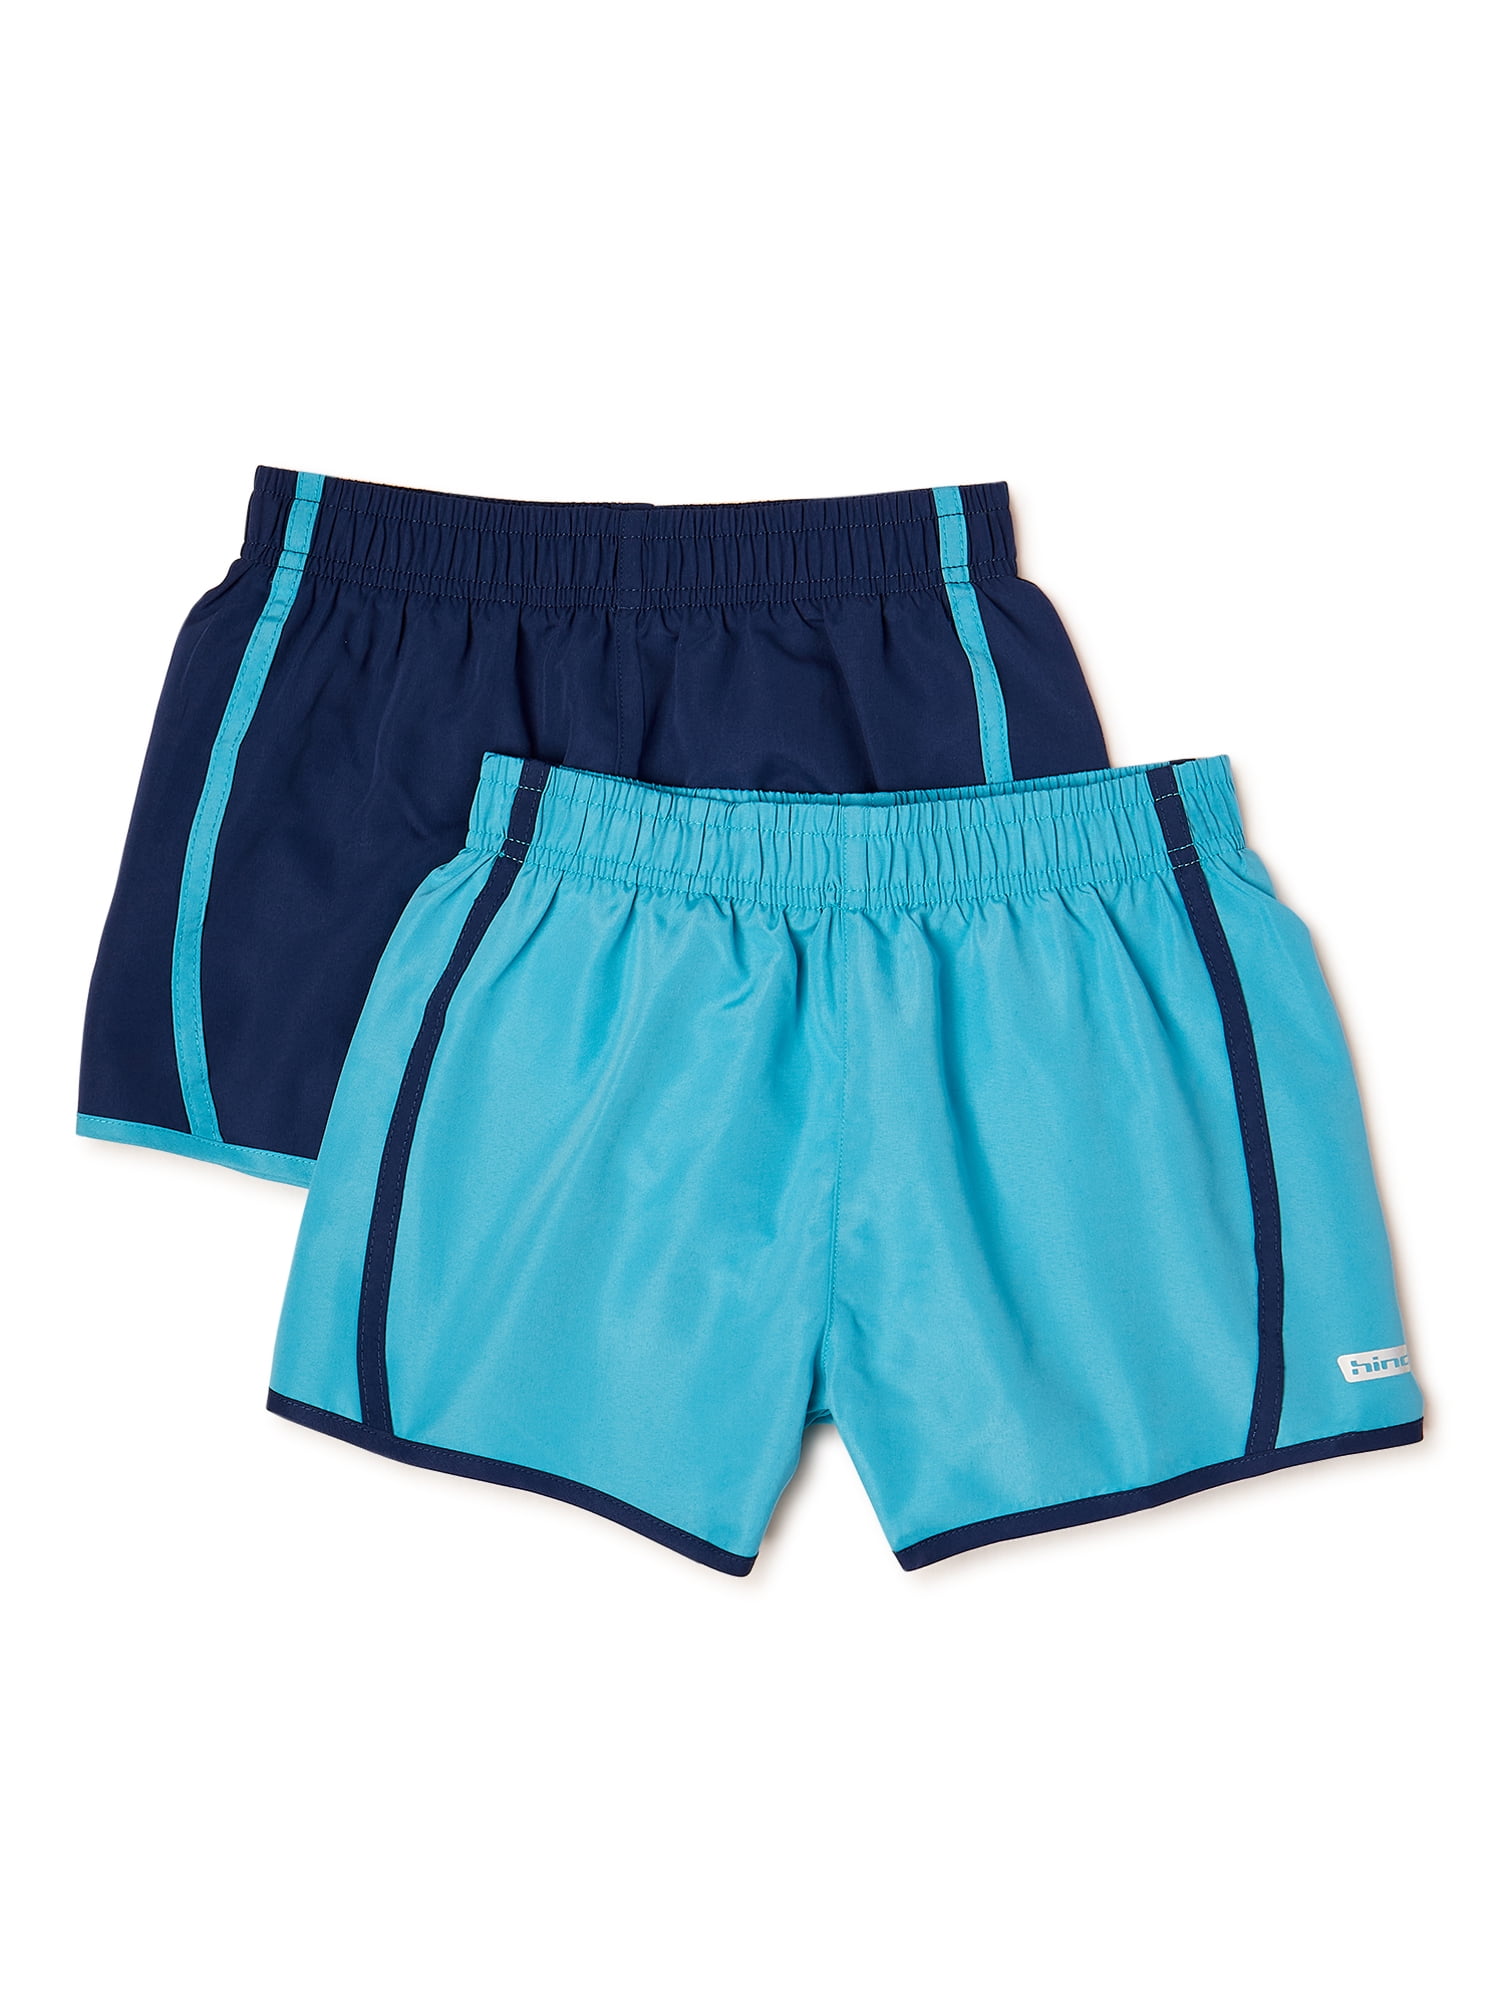 Hind Girls Solid Running Shorts, 2-Pack, Sizes 4-16 - Walmart.com